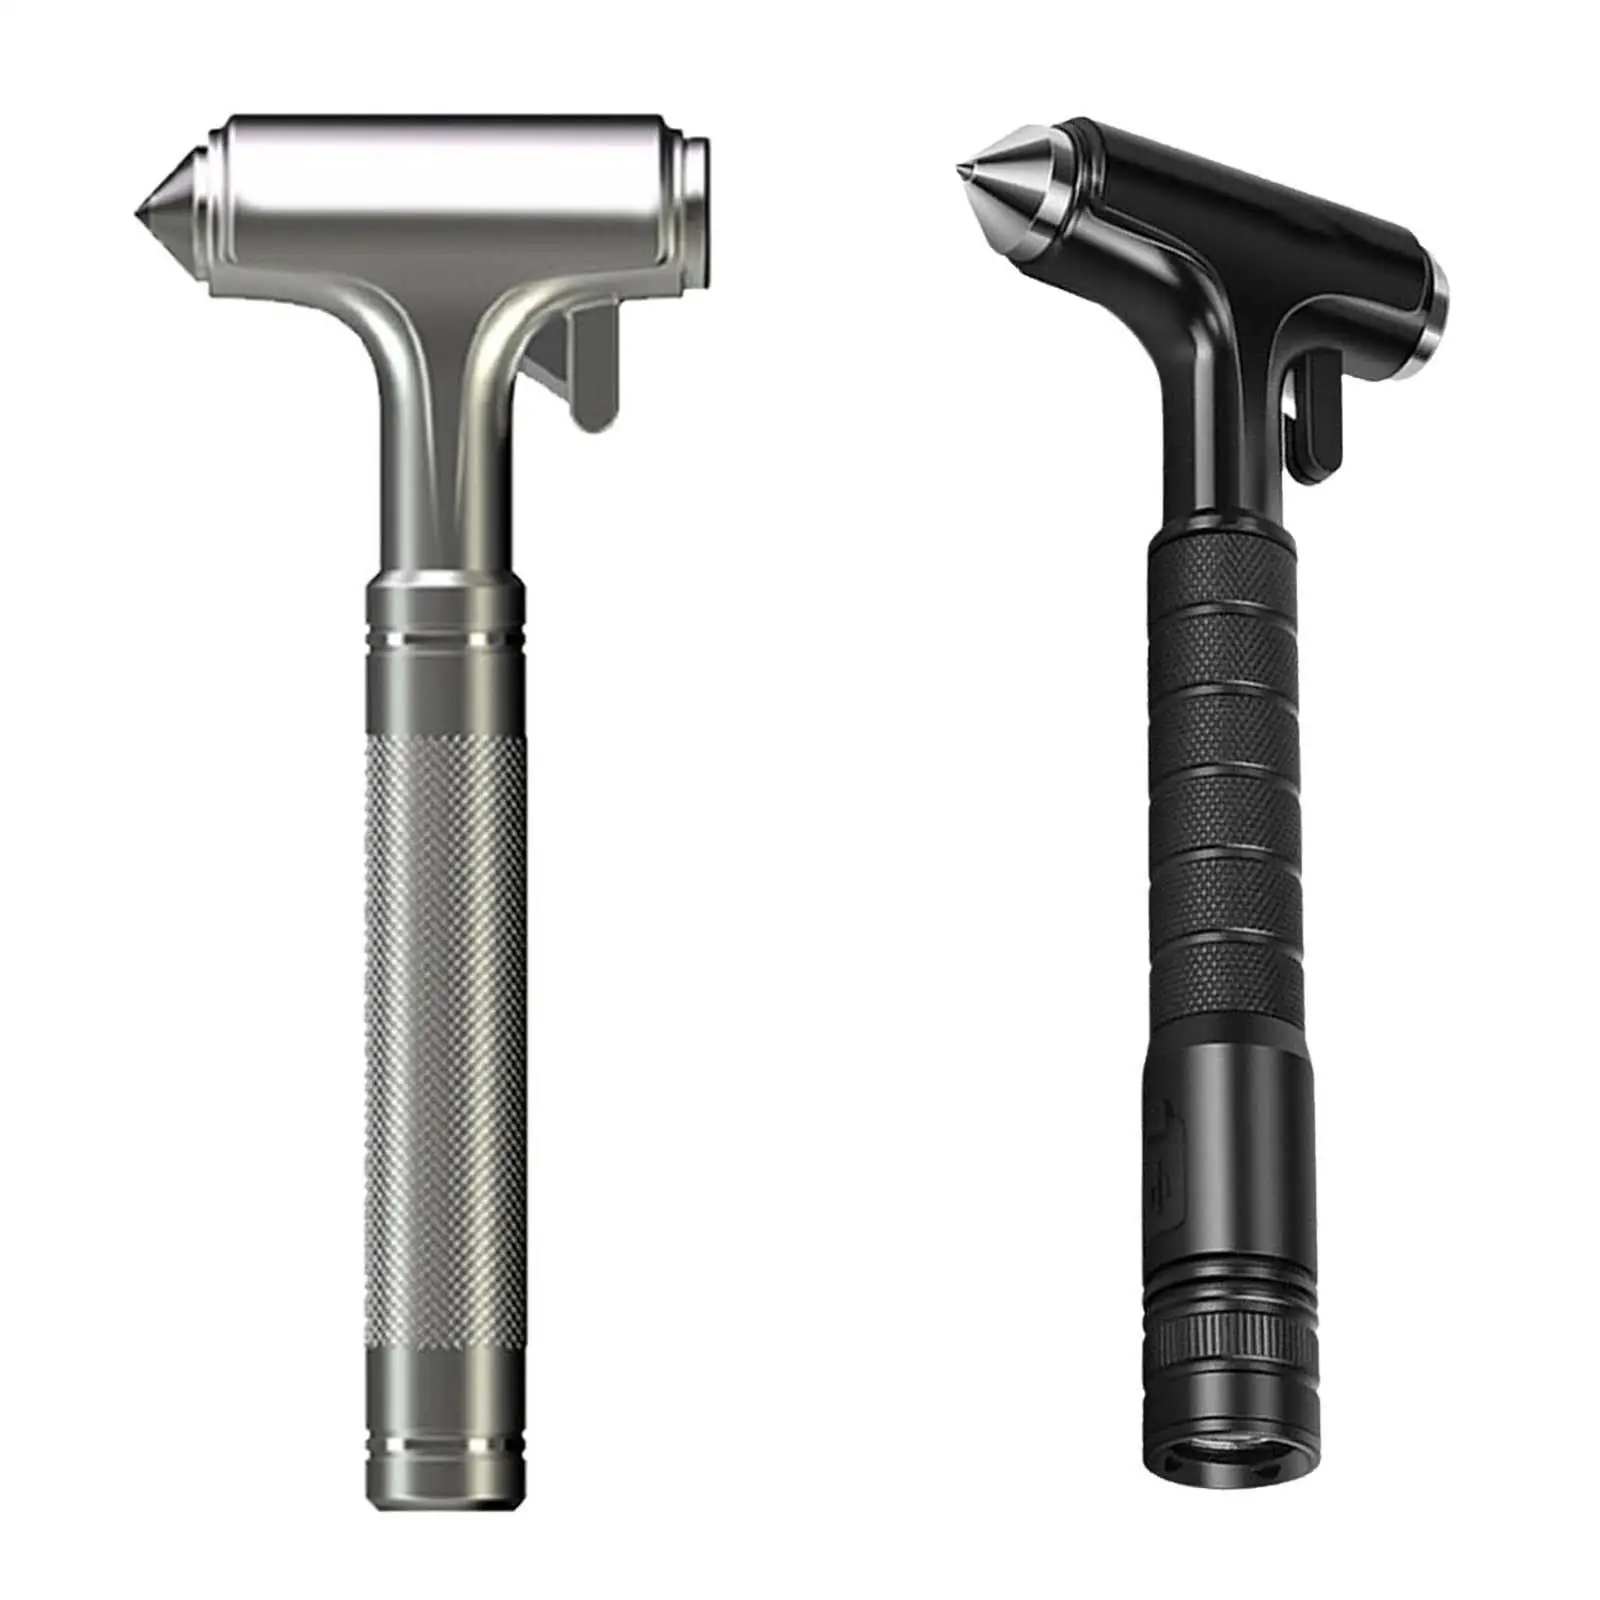 Car Safety Hammer, Glass Breaker Hidden Seatbelt Cutter Self Rescue Tools Life Saving Portable Auto Tungsten Steel Hammer Tip